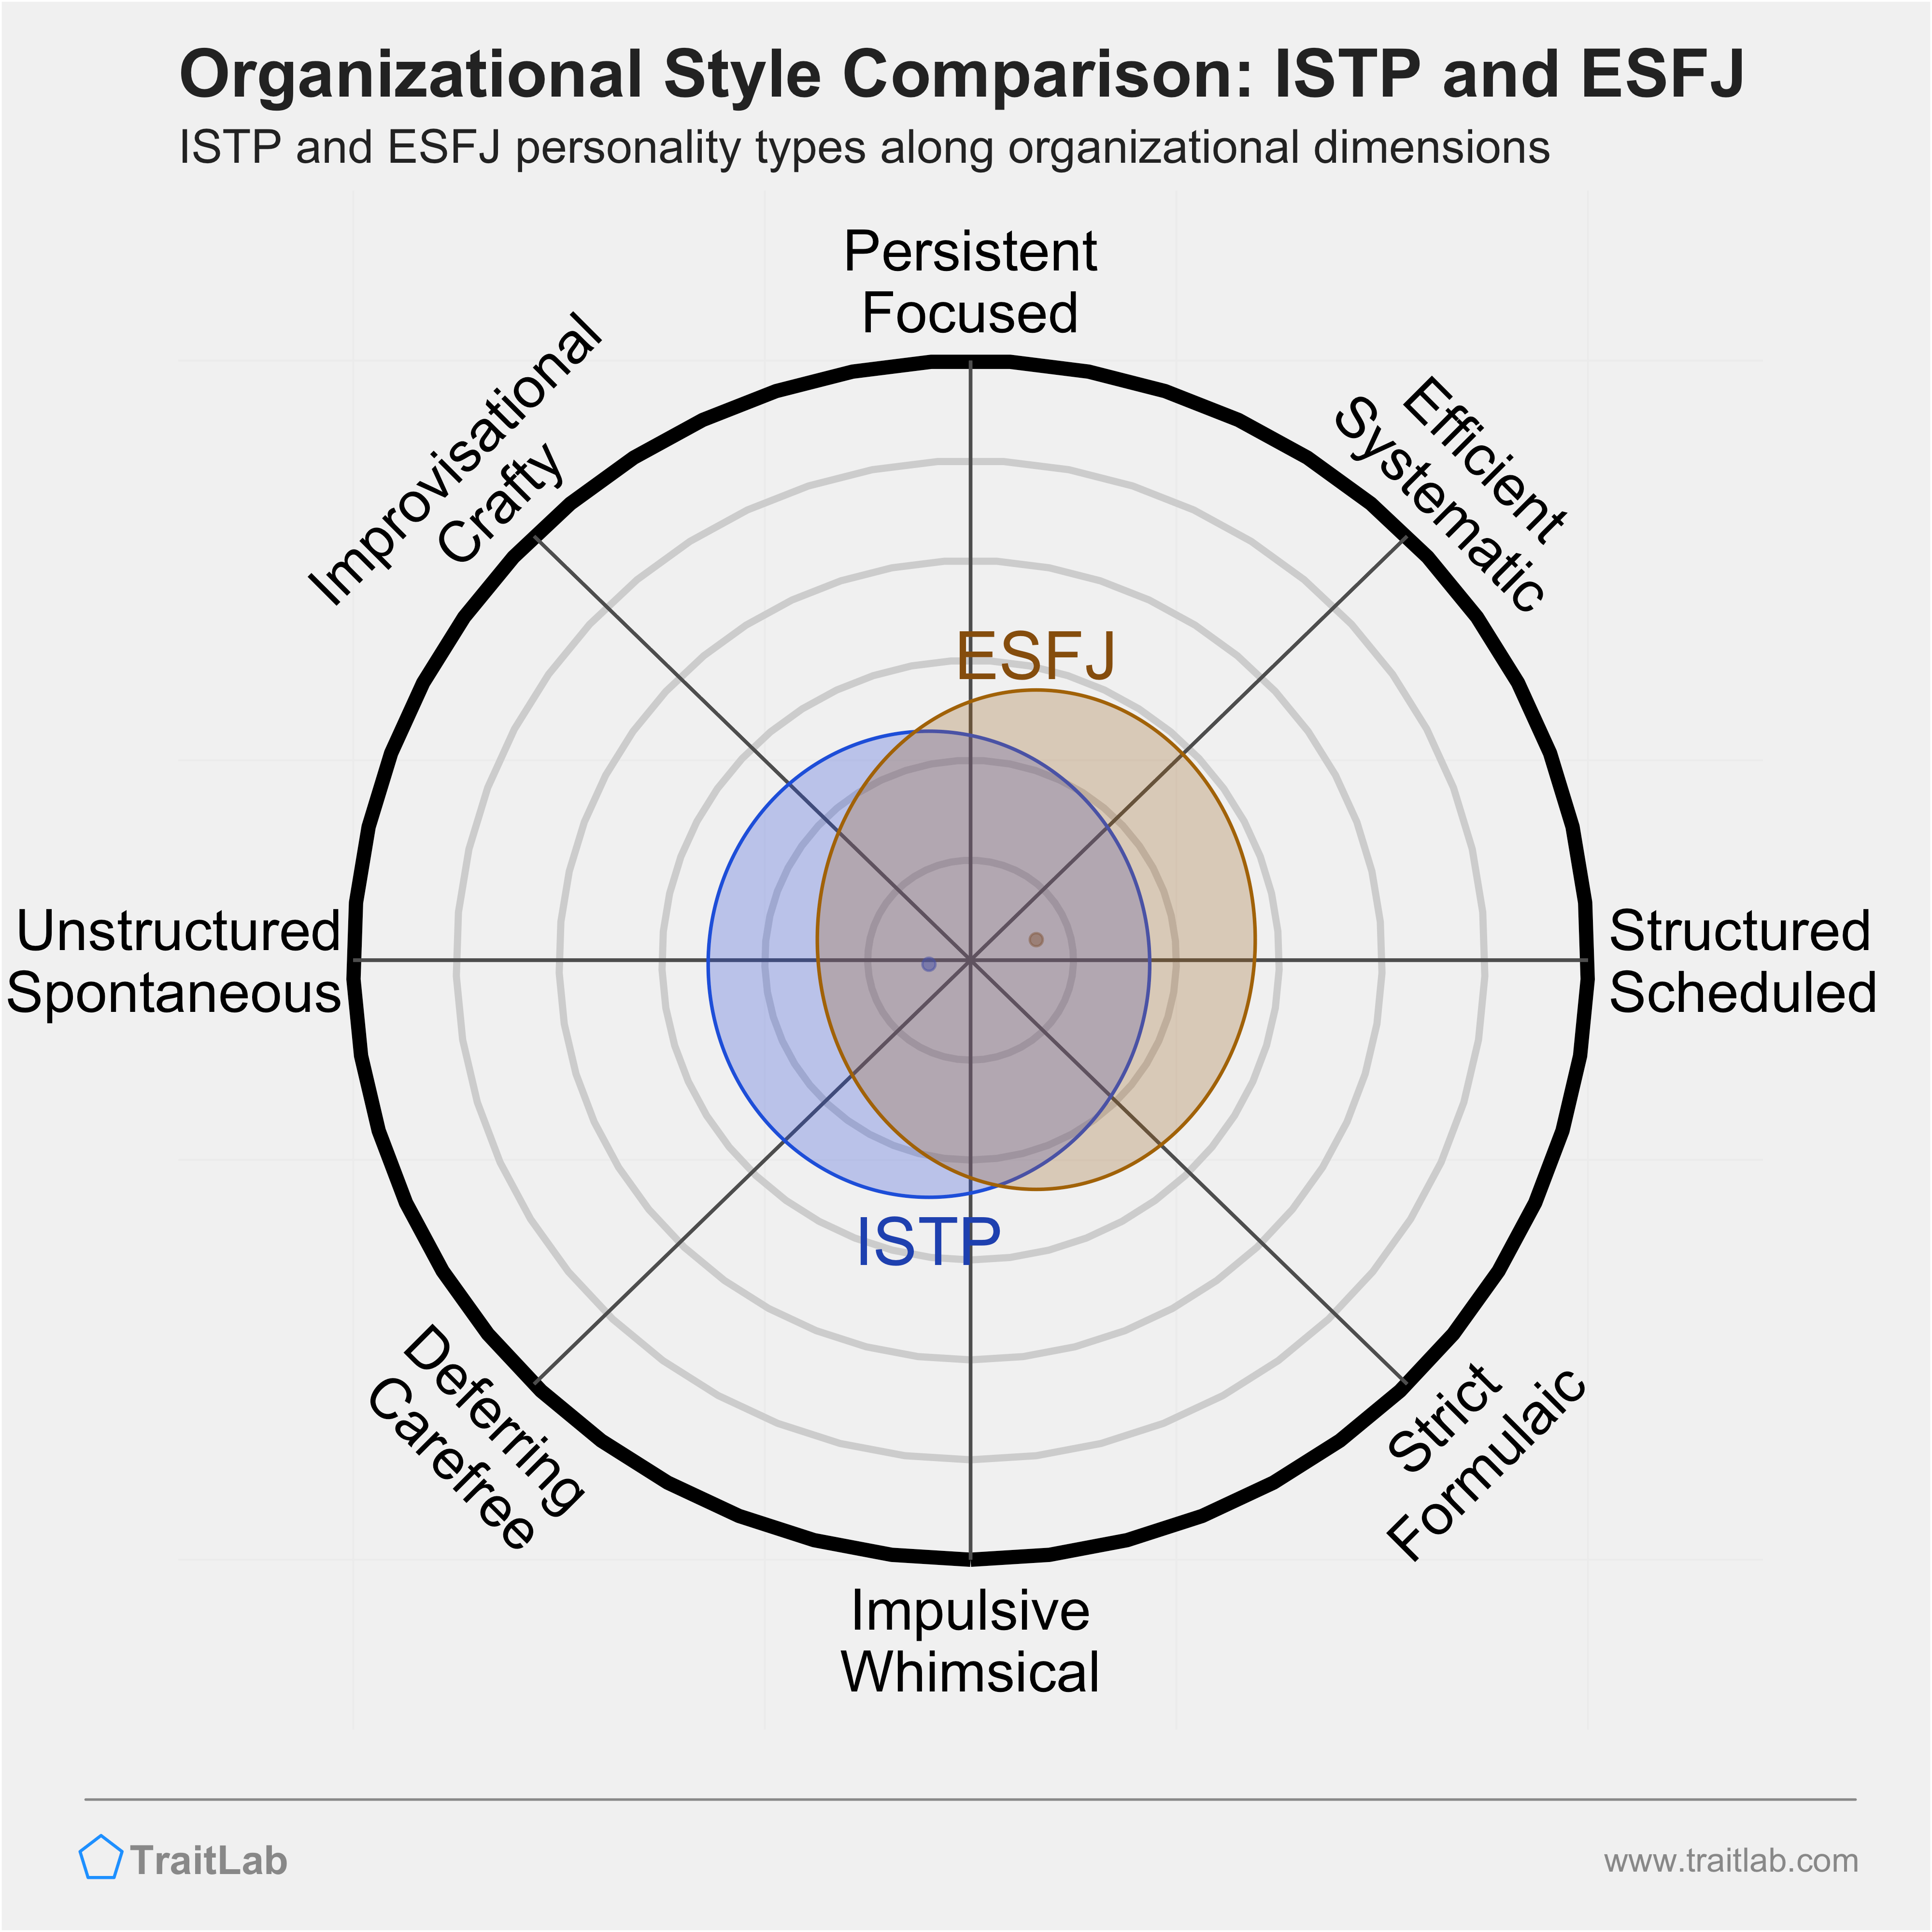 ISTP and ESFJ comparison across organizational dimensions